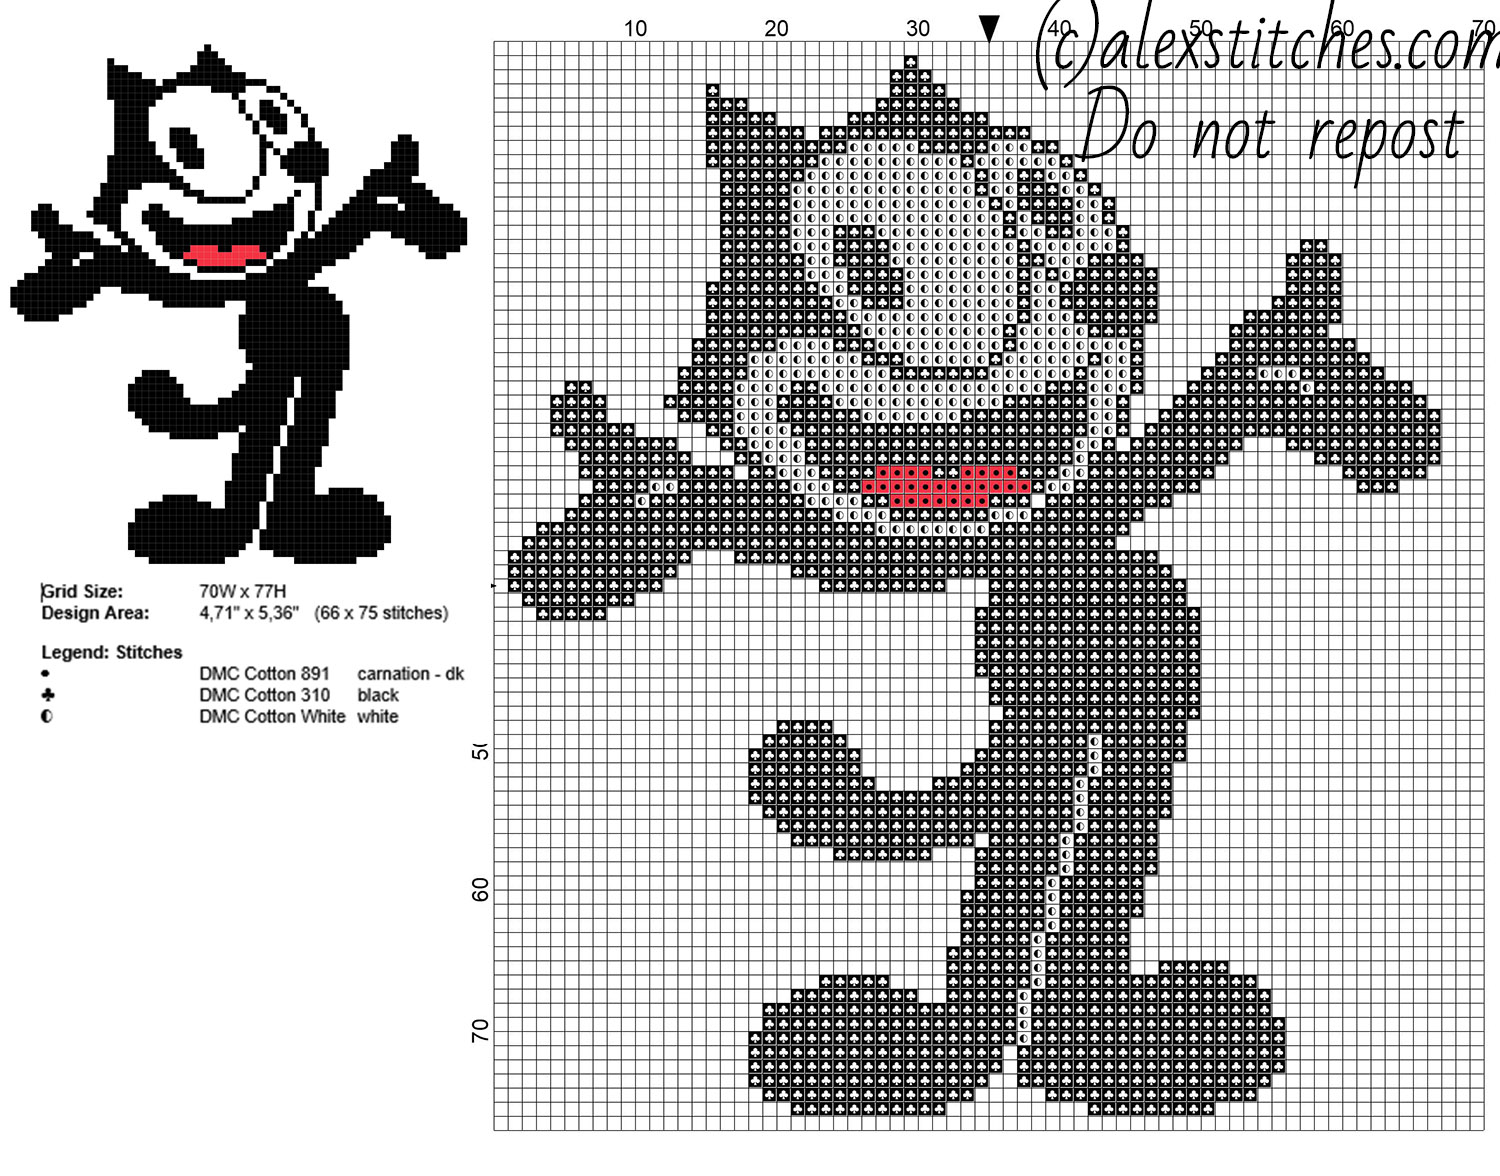 Felix The Cat vintage cartoon character cross stitch pattern 66 x 75  stitches 3 DMC threads - free cross stitch patterns by Alex